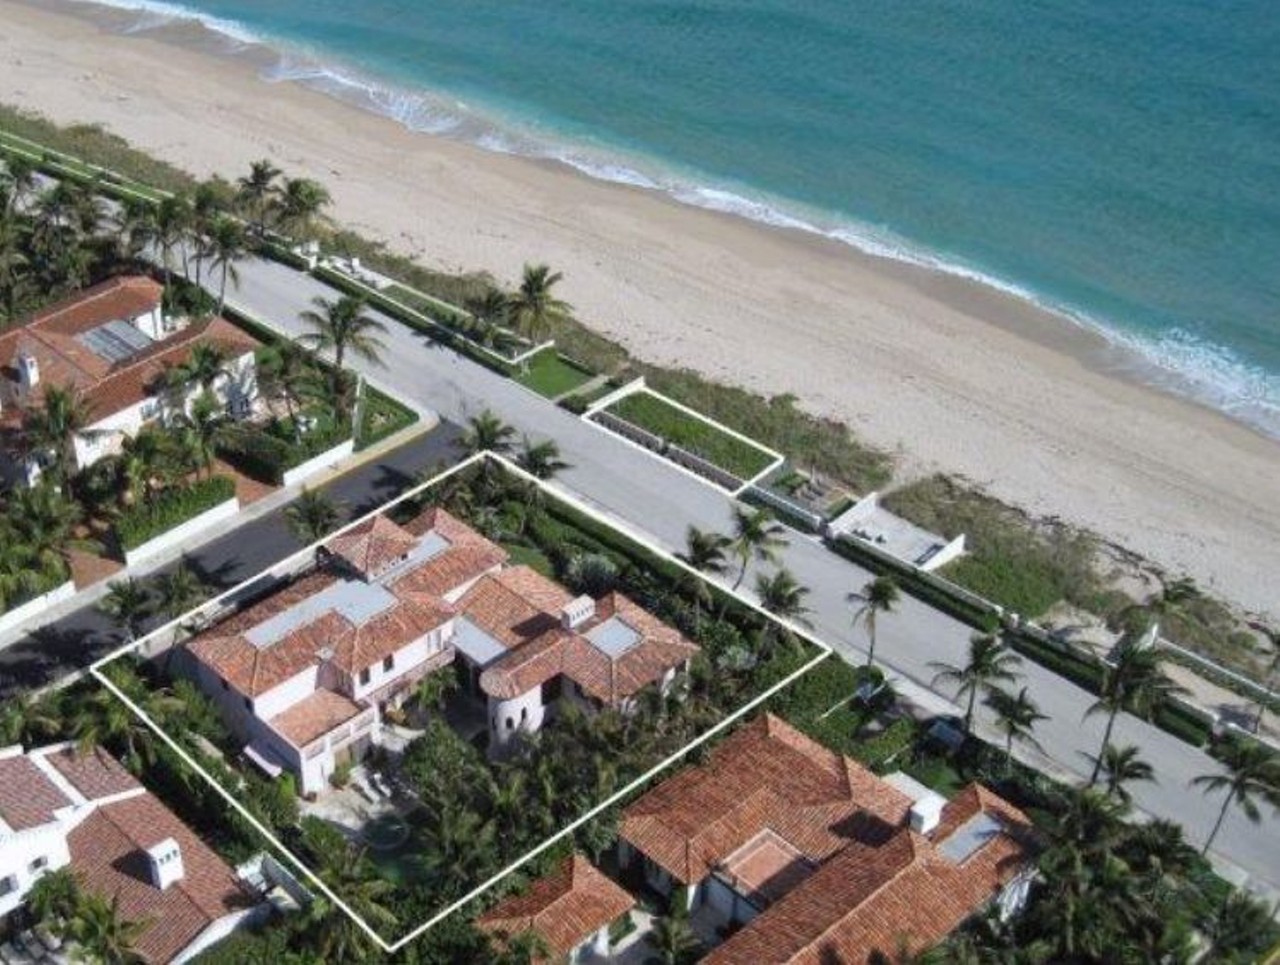 Rock legend Jon Bon Jovi just bought this Florida mansion for $10 million